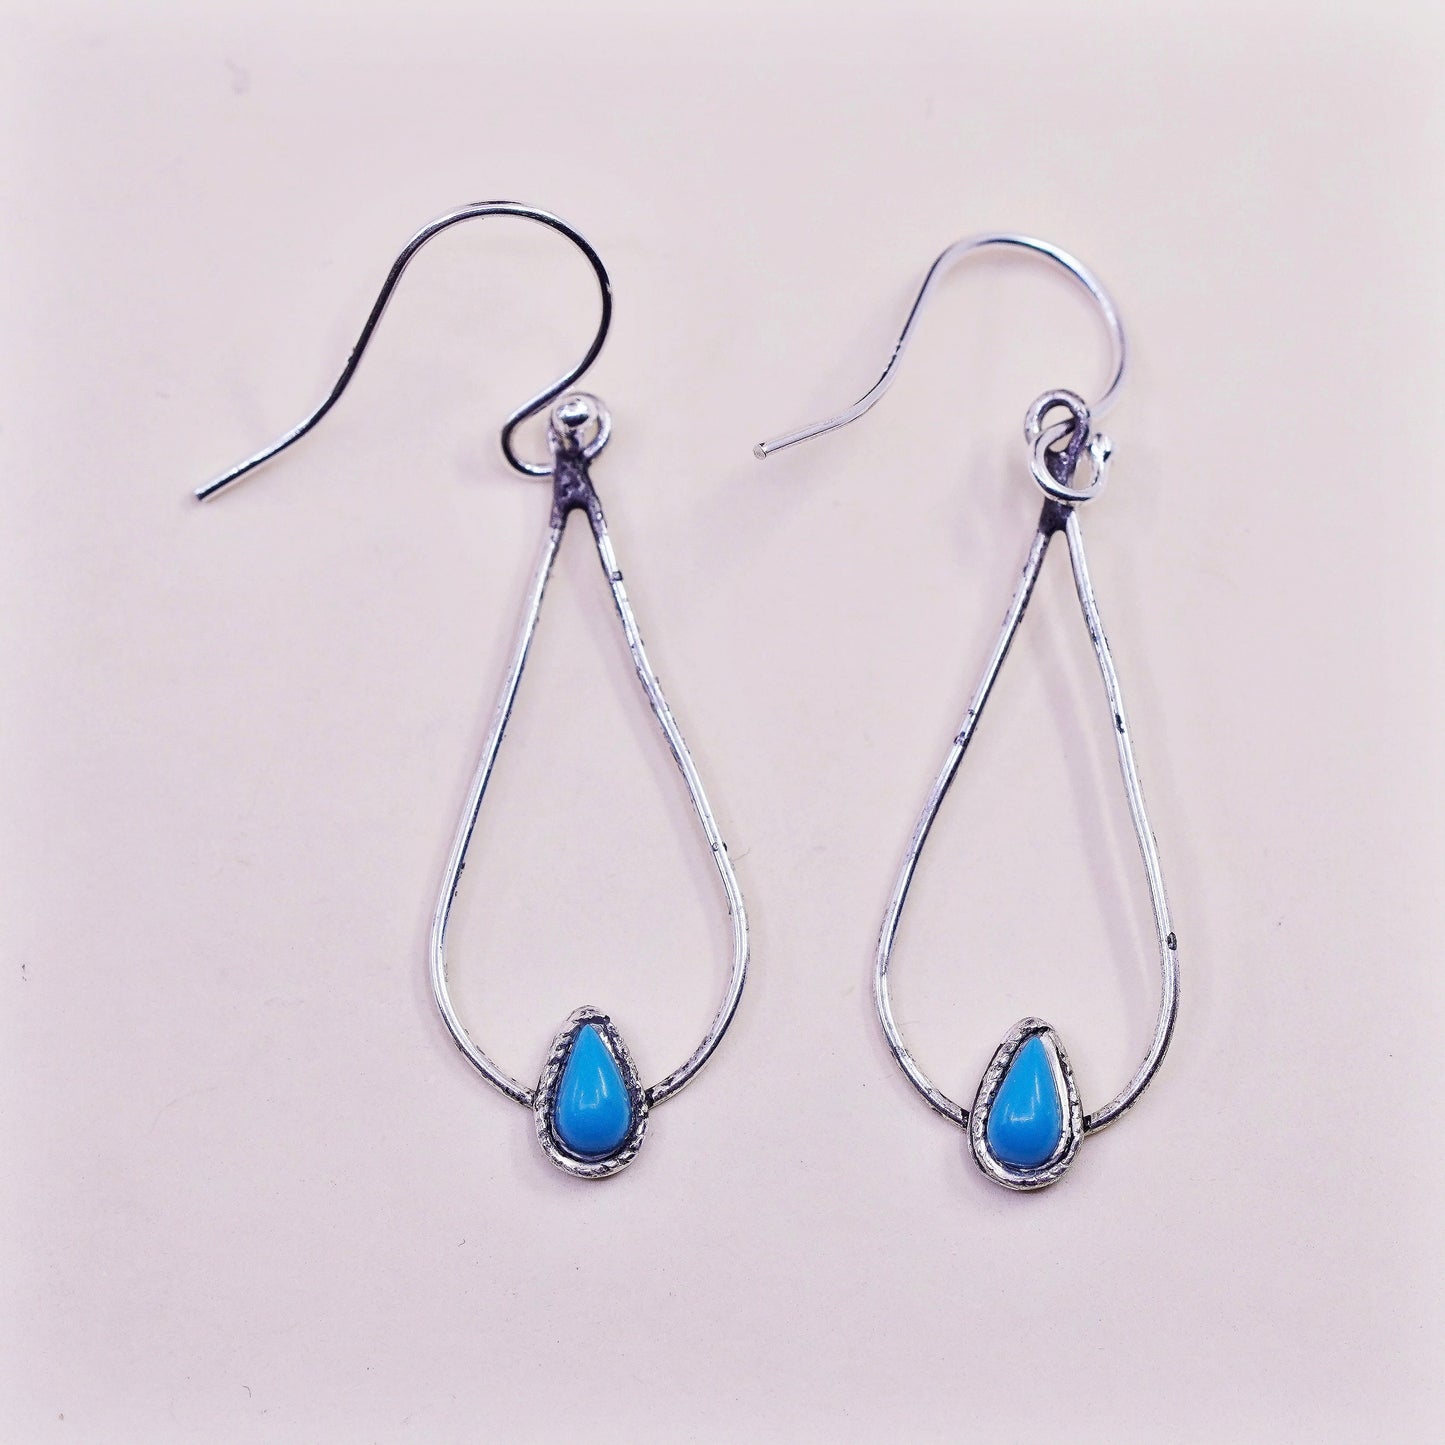 Vintage Sterling silver handmade earrings, 925 teardrop drops with turquoise